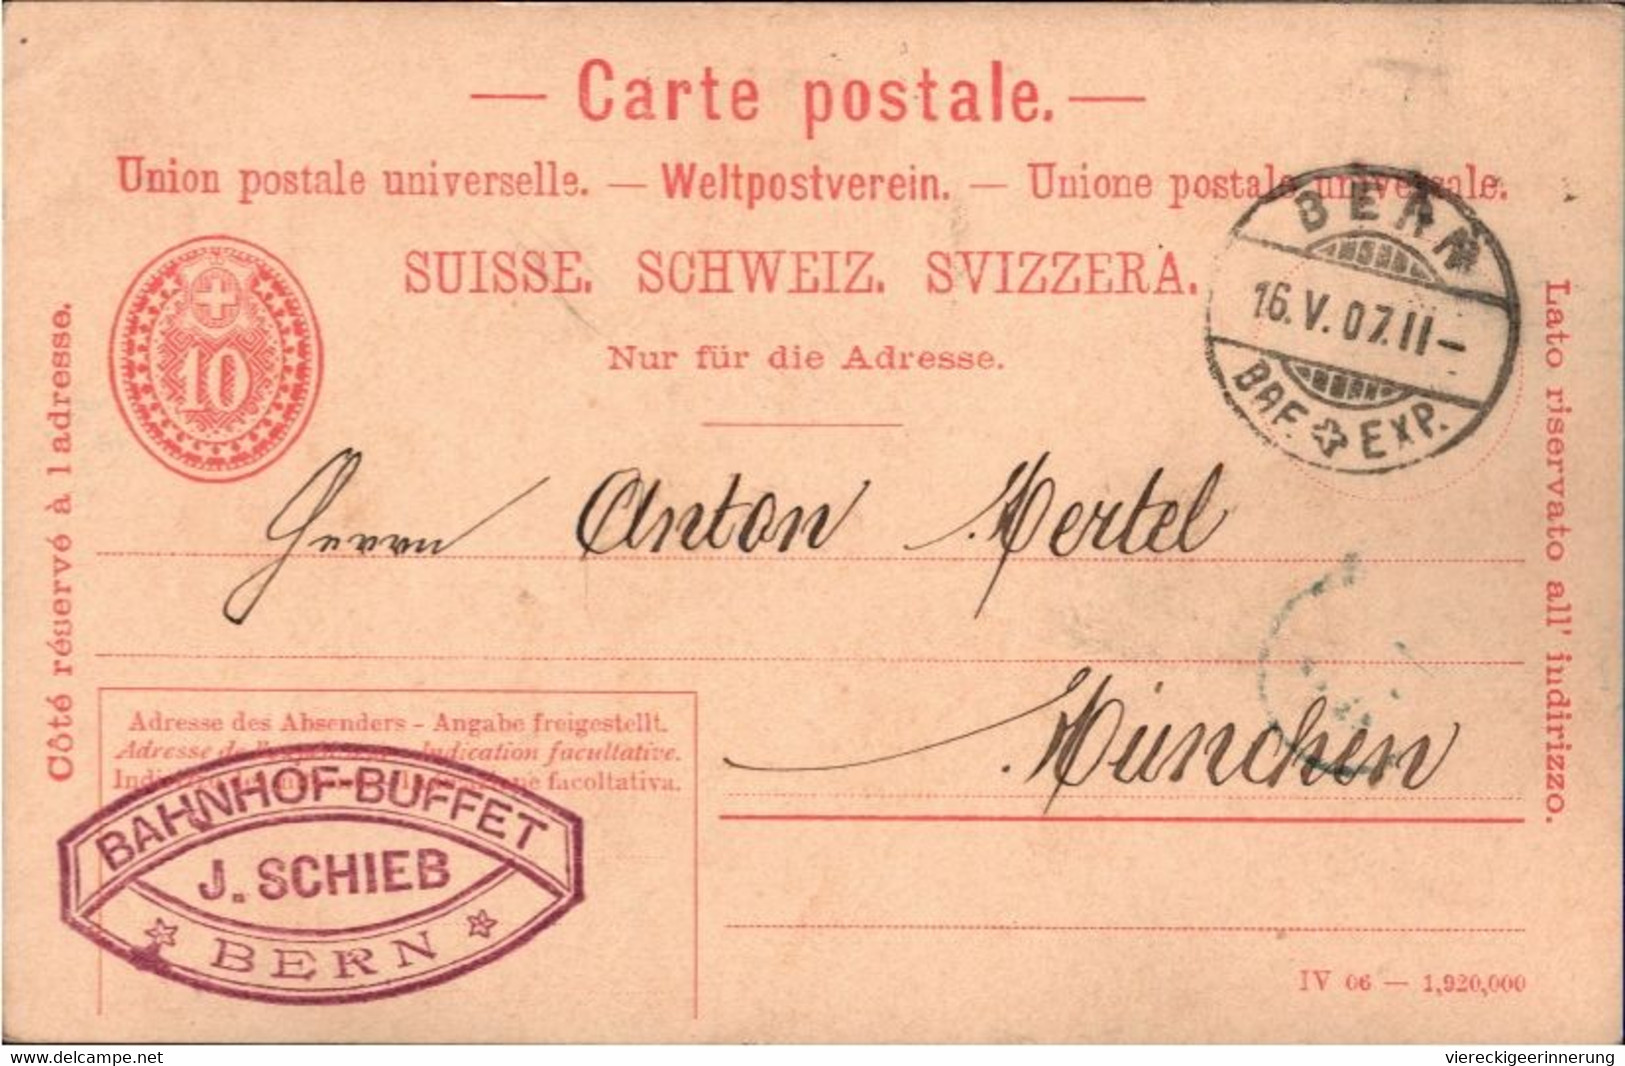 ! Lot von 15 Ganzsachen aus Bern, Schweiz, 1901-1909, u.a. Bahnhof Buffett, Velo Fabrik